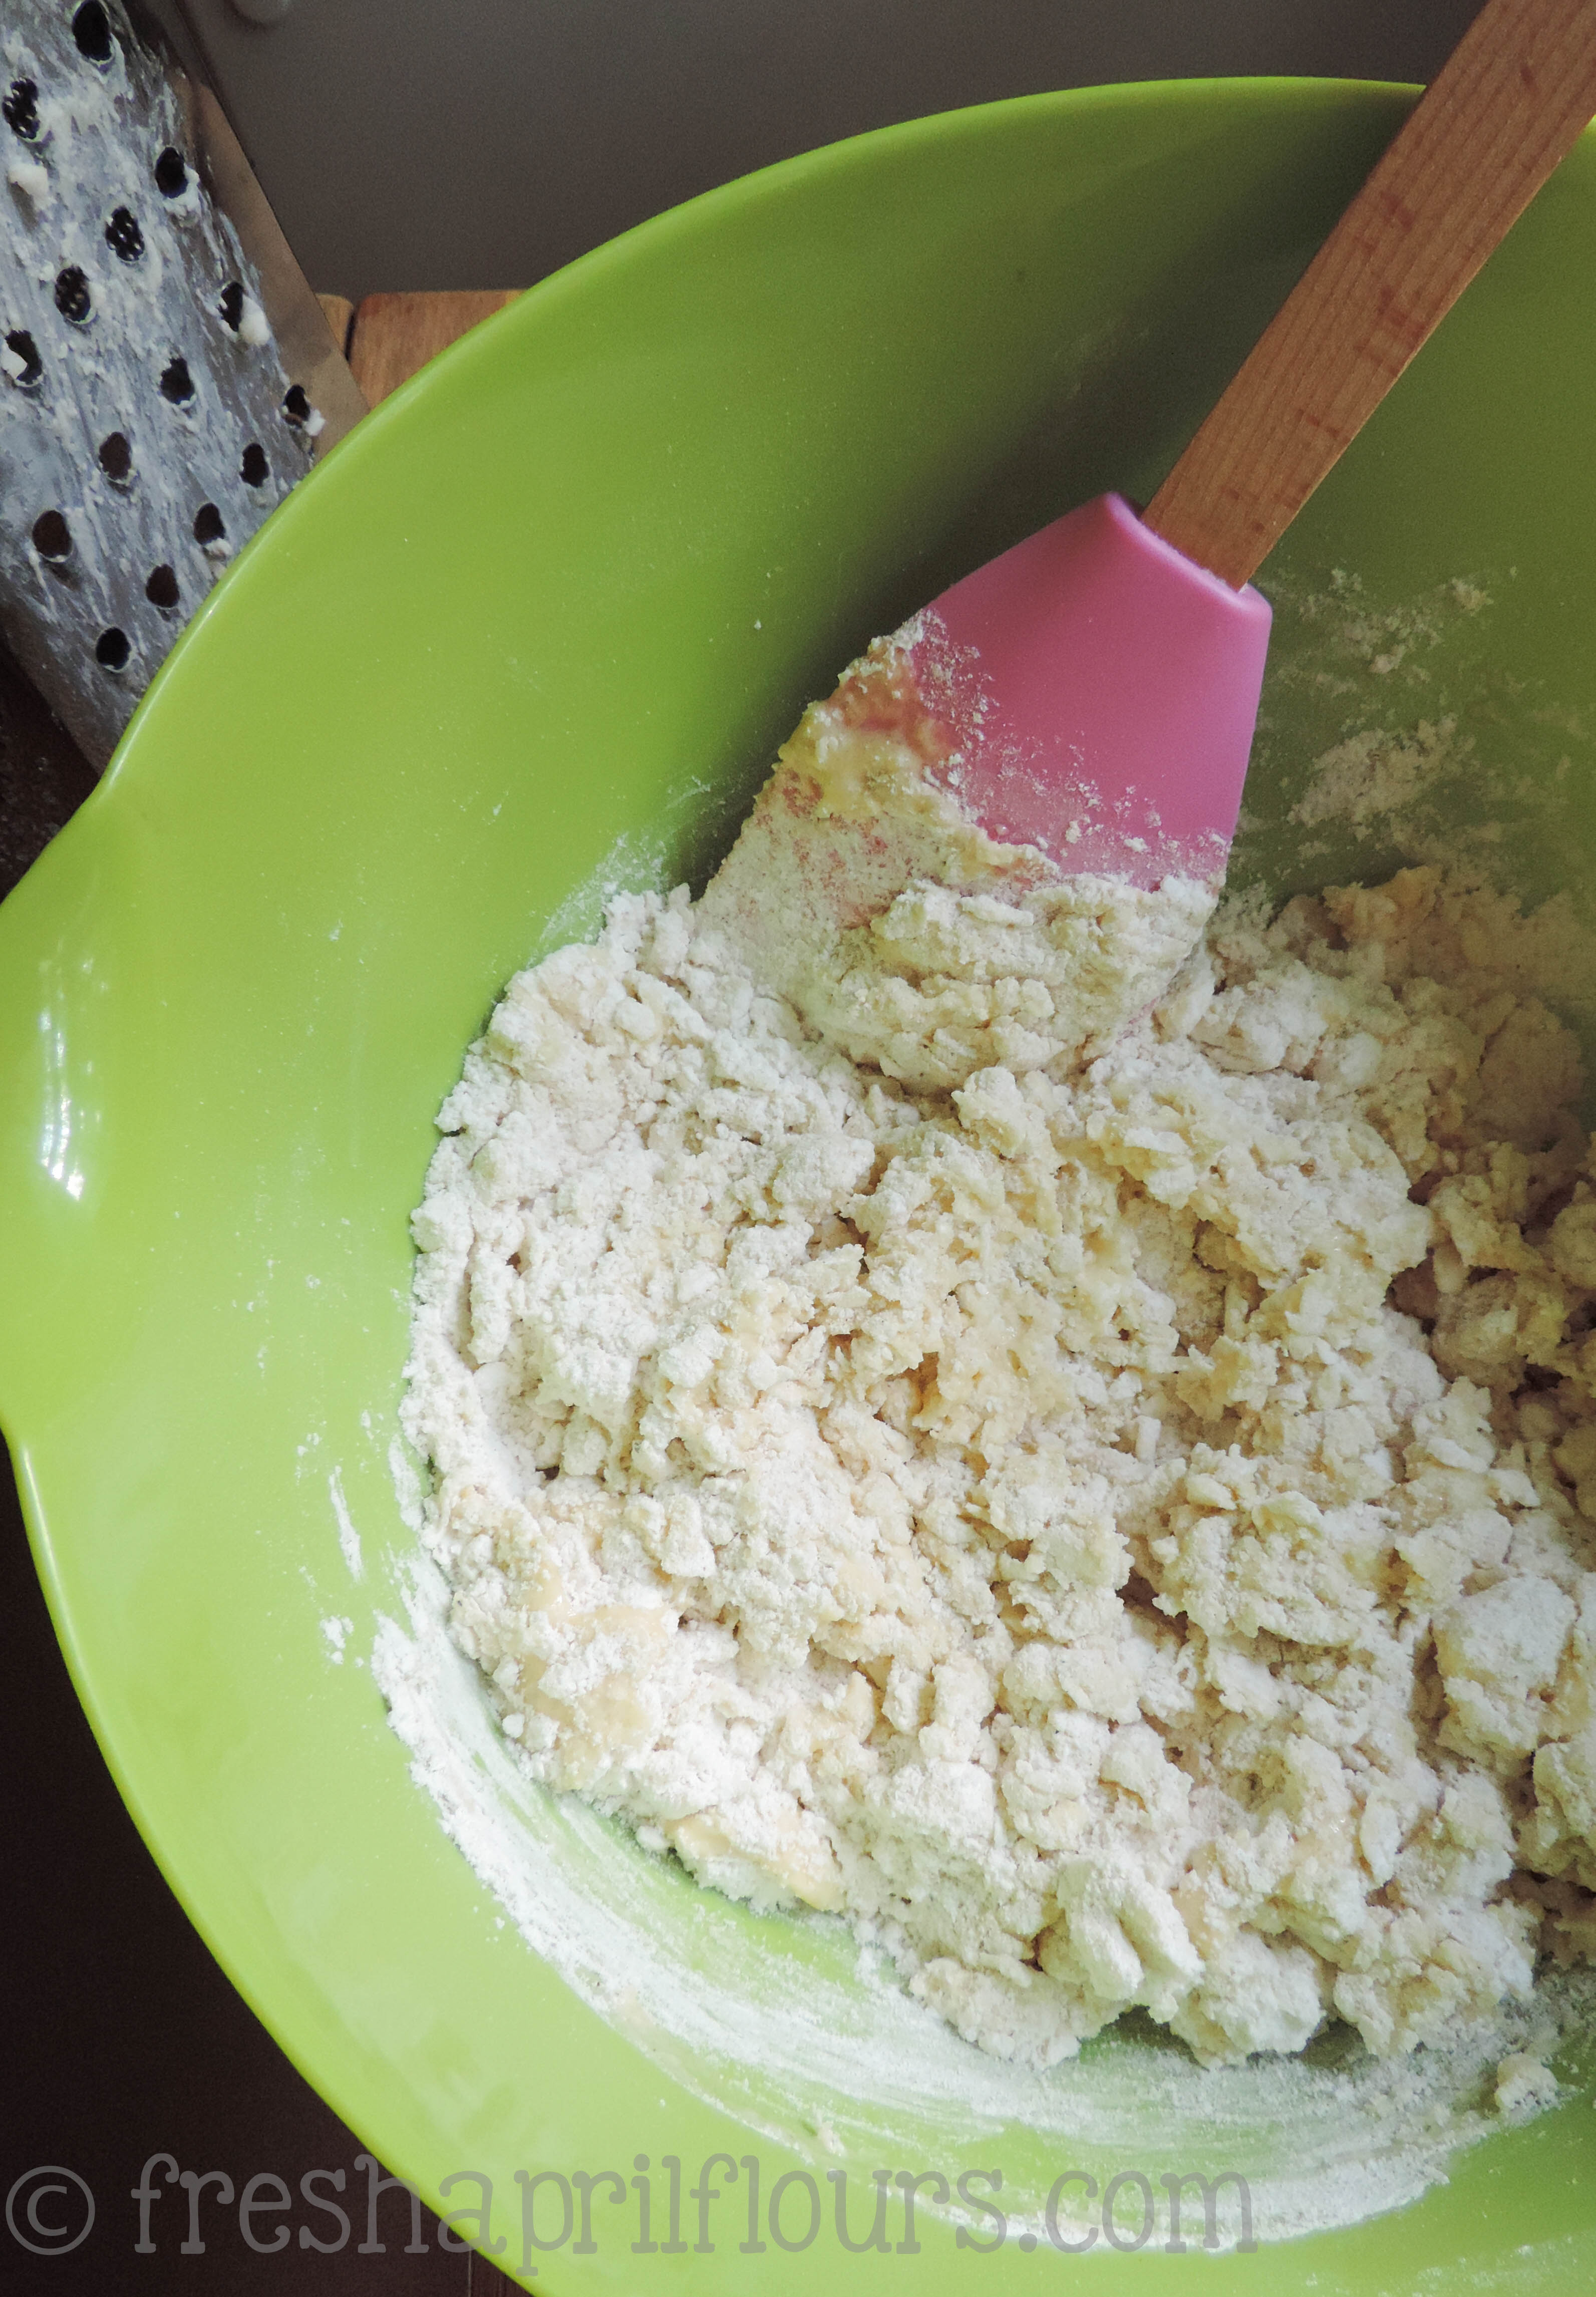 mixing dough for cinnamon crunch scones